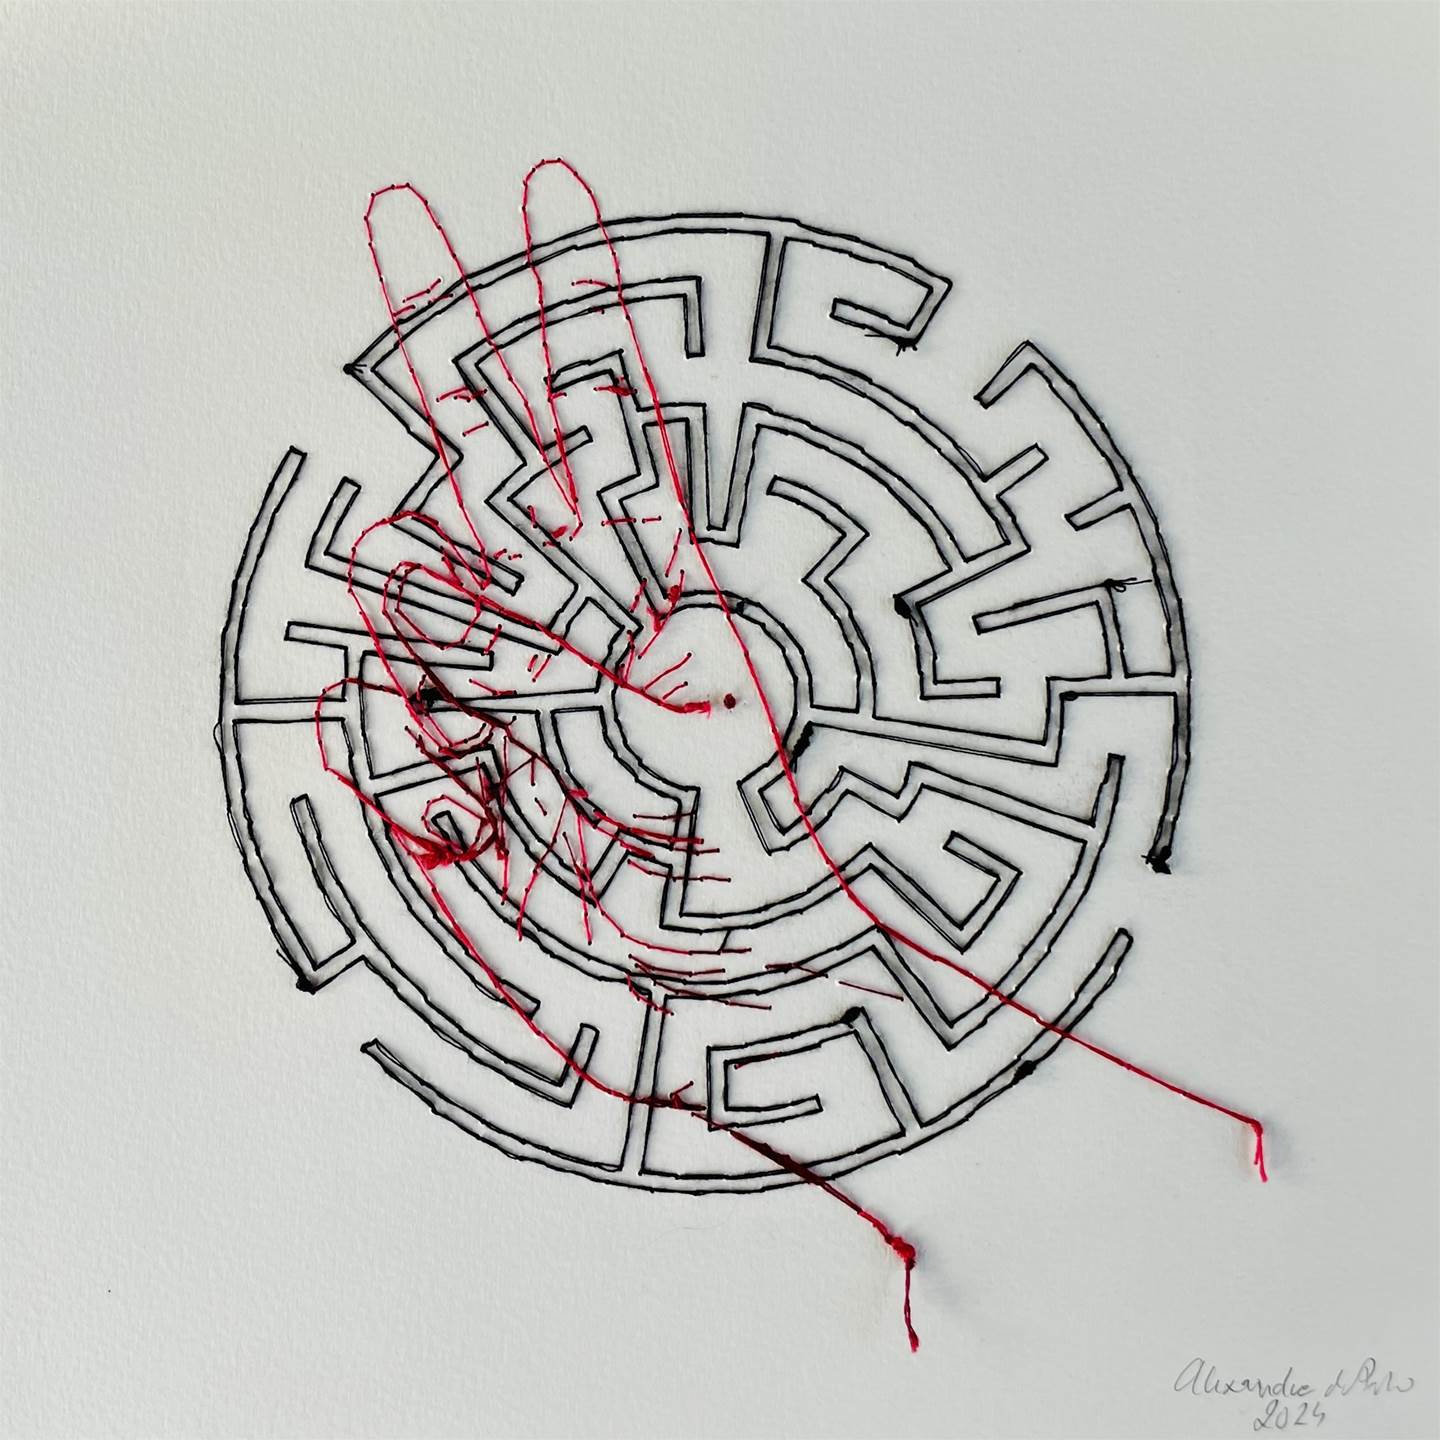 Exercício de Labirintologia #6, original Minimalist Paper Drawing and Illustration by Alexandra de Pinho